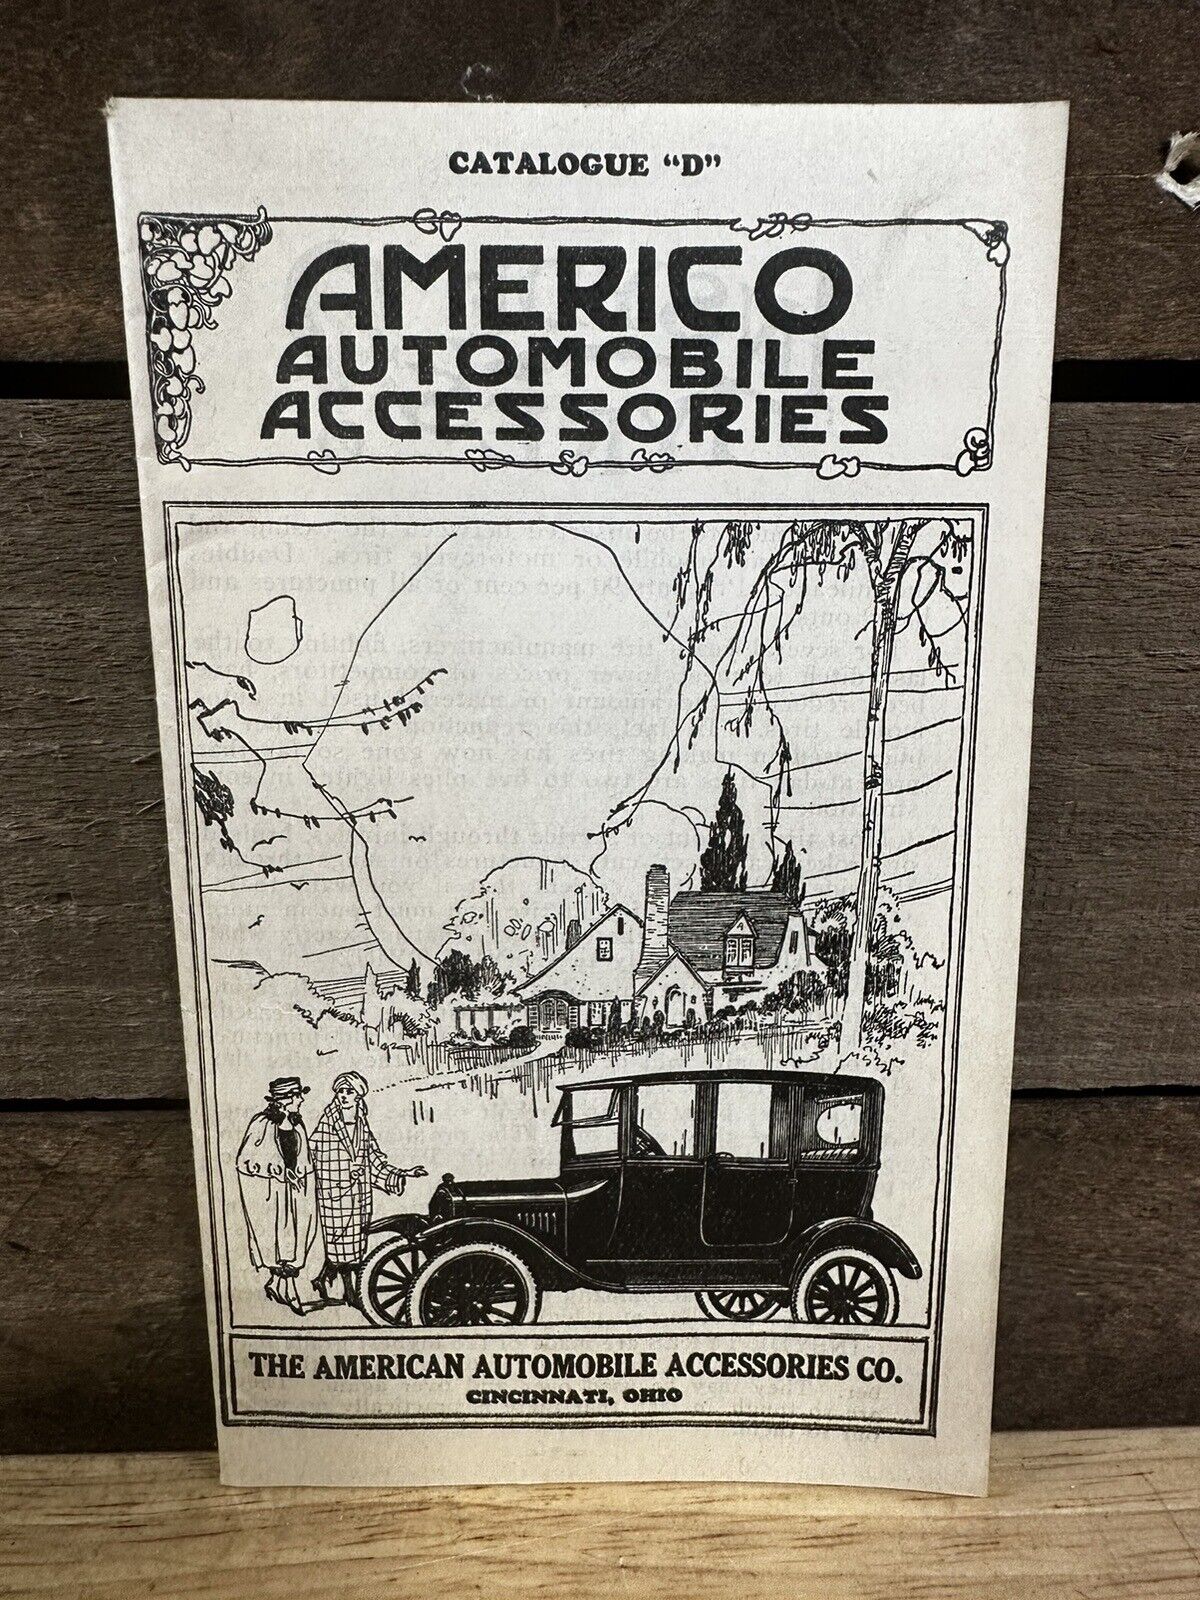 Antique 1920’s “Americo Automobile Accessories” Brochure